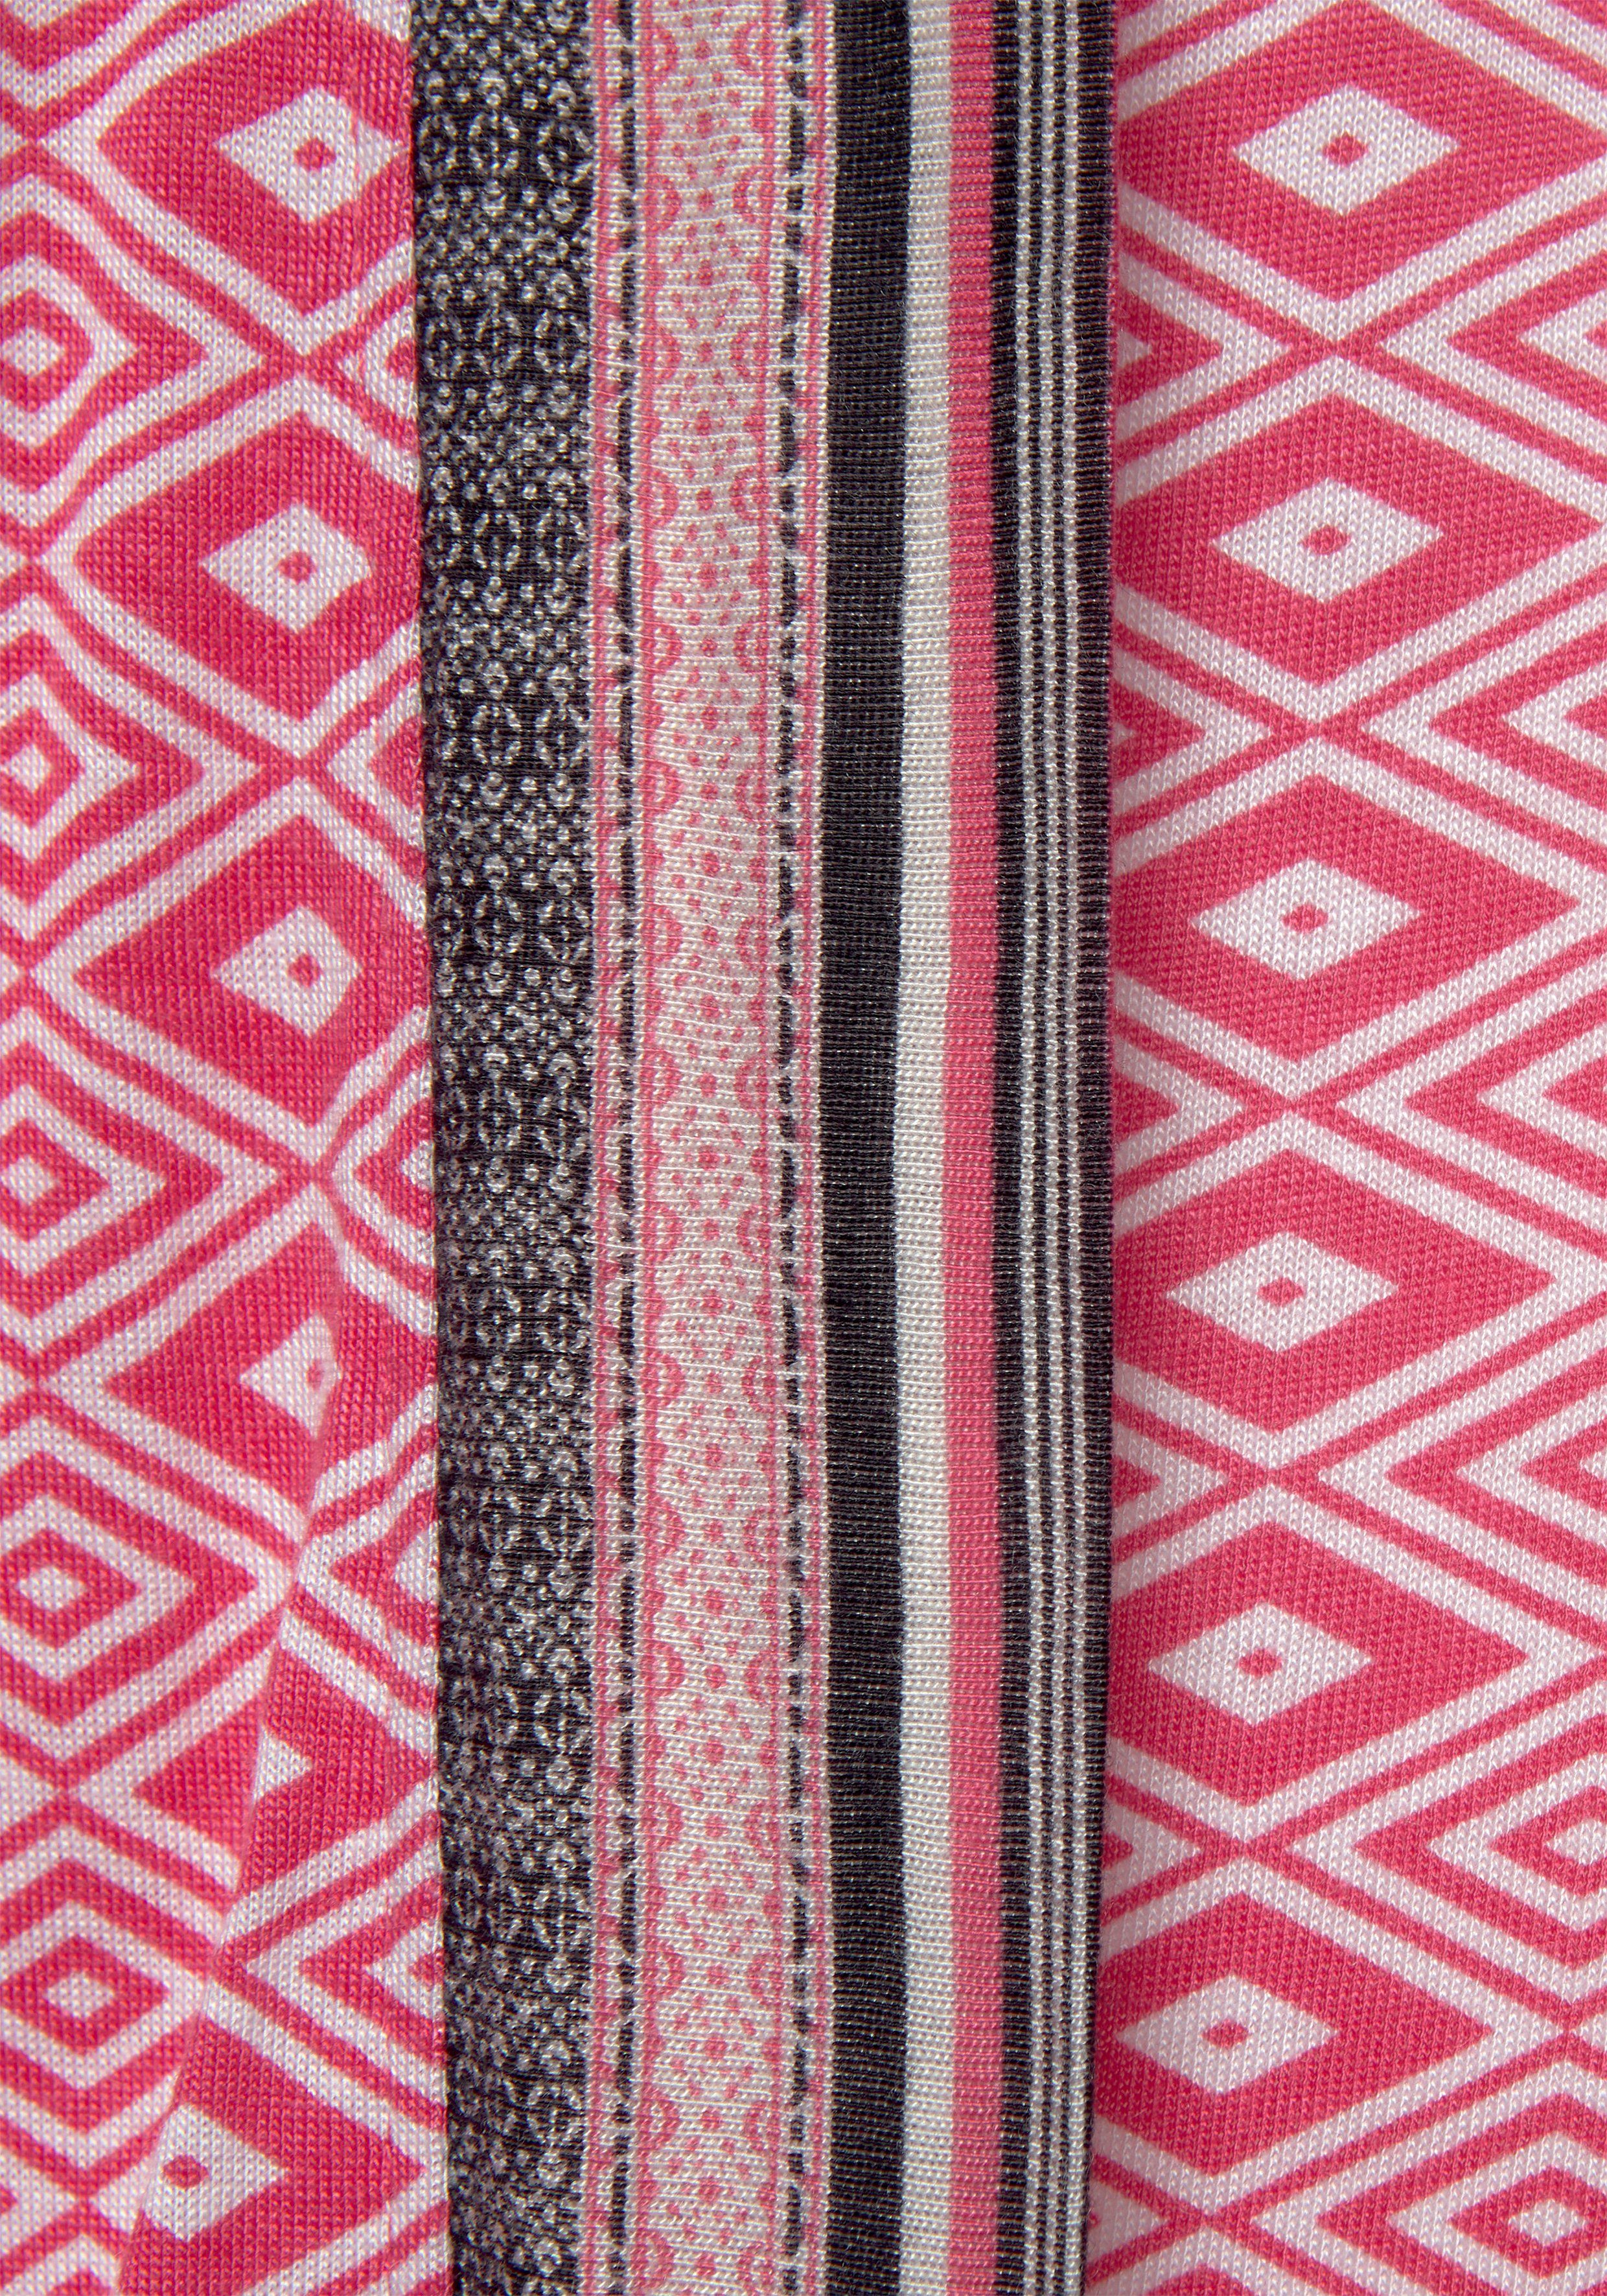 Vivance Dreams Kimono-Kragen, Gürtel, Kurzform, Kimono, gemustert Single-Jersey, pink Ethno-Design in schönem